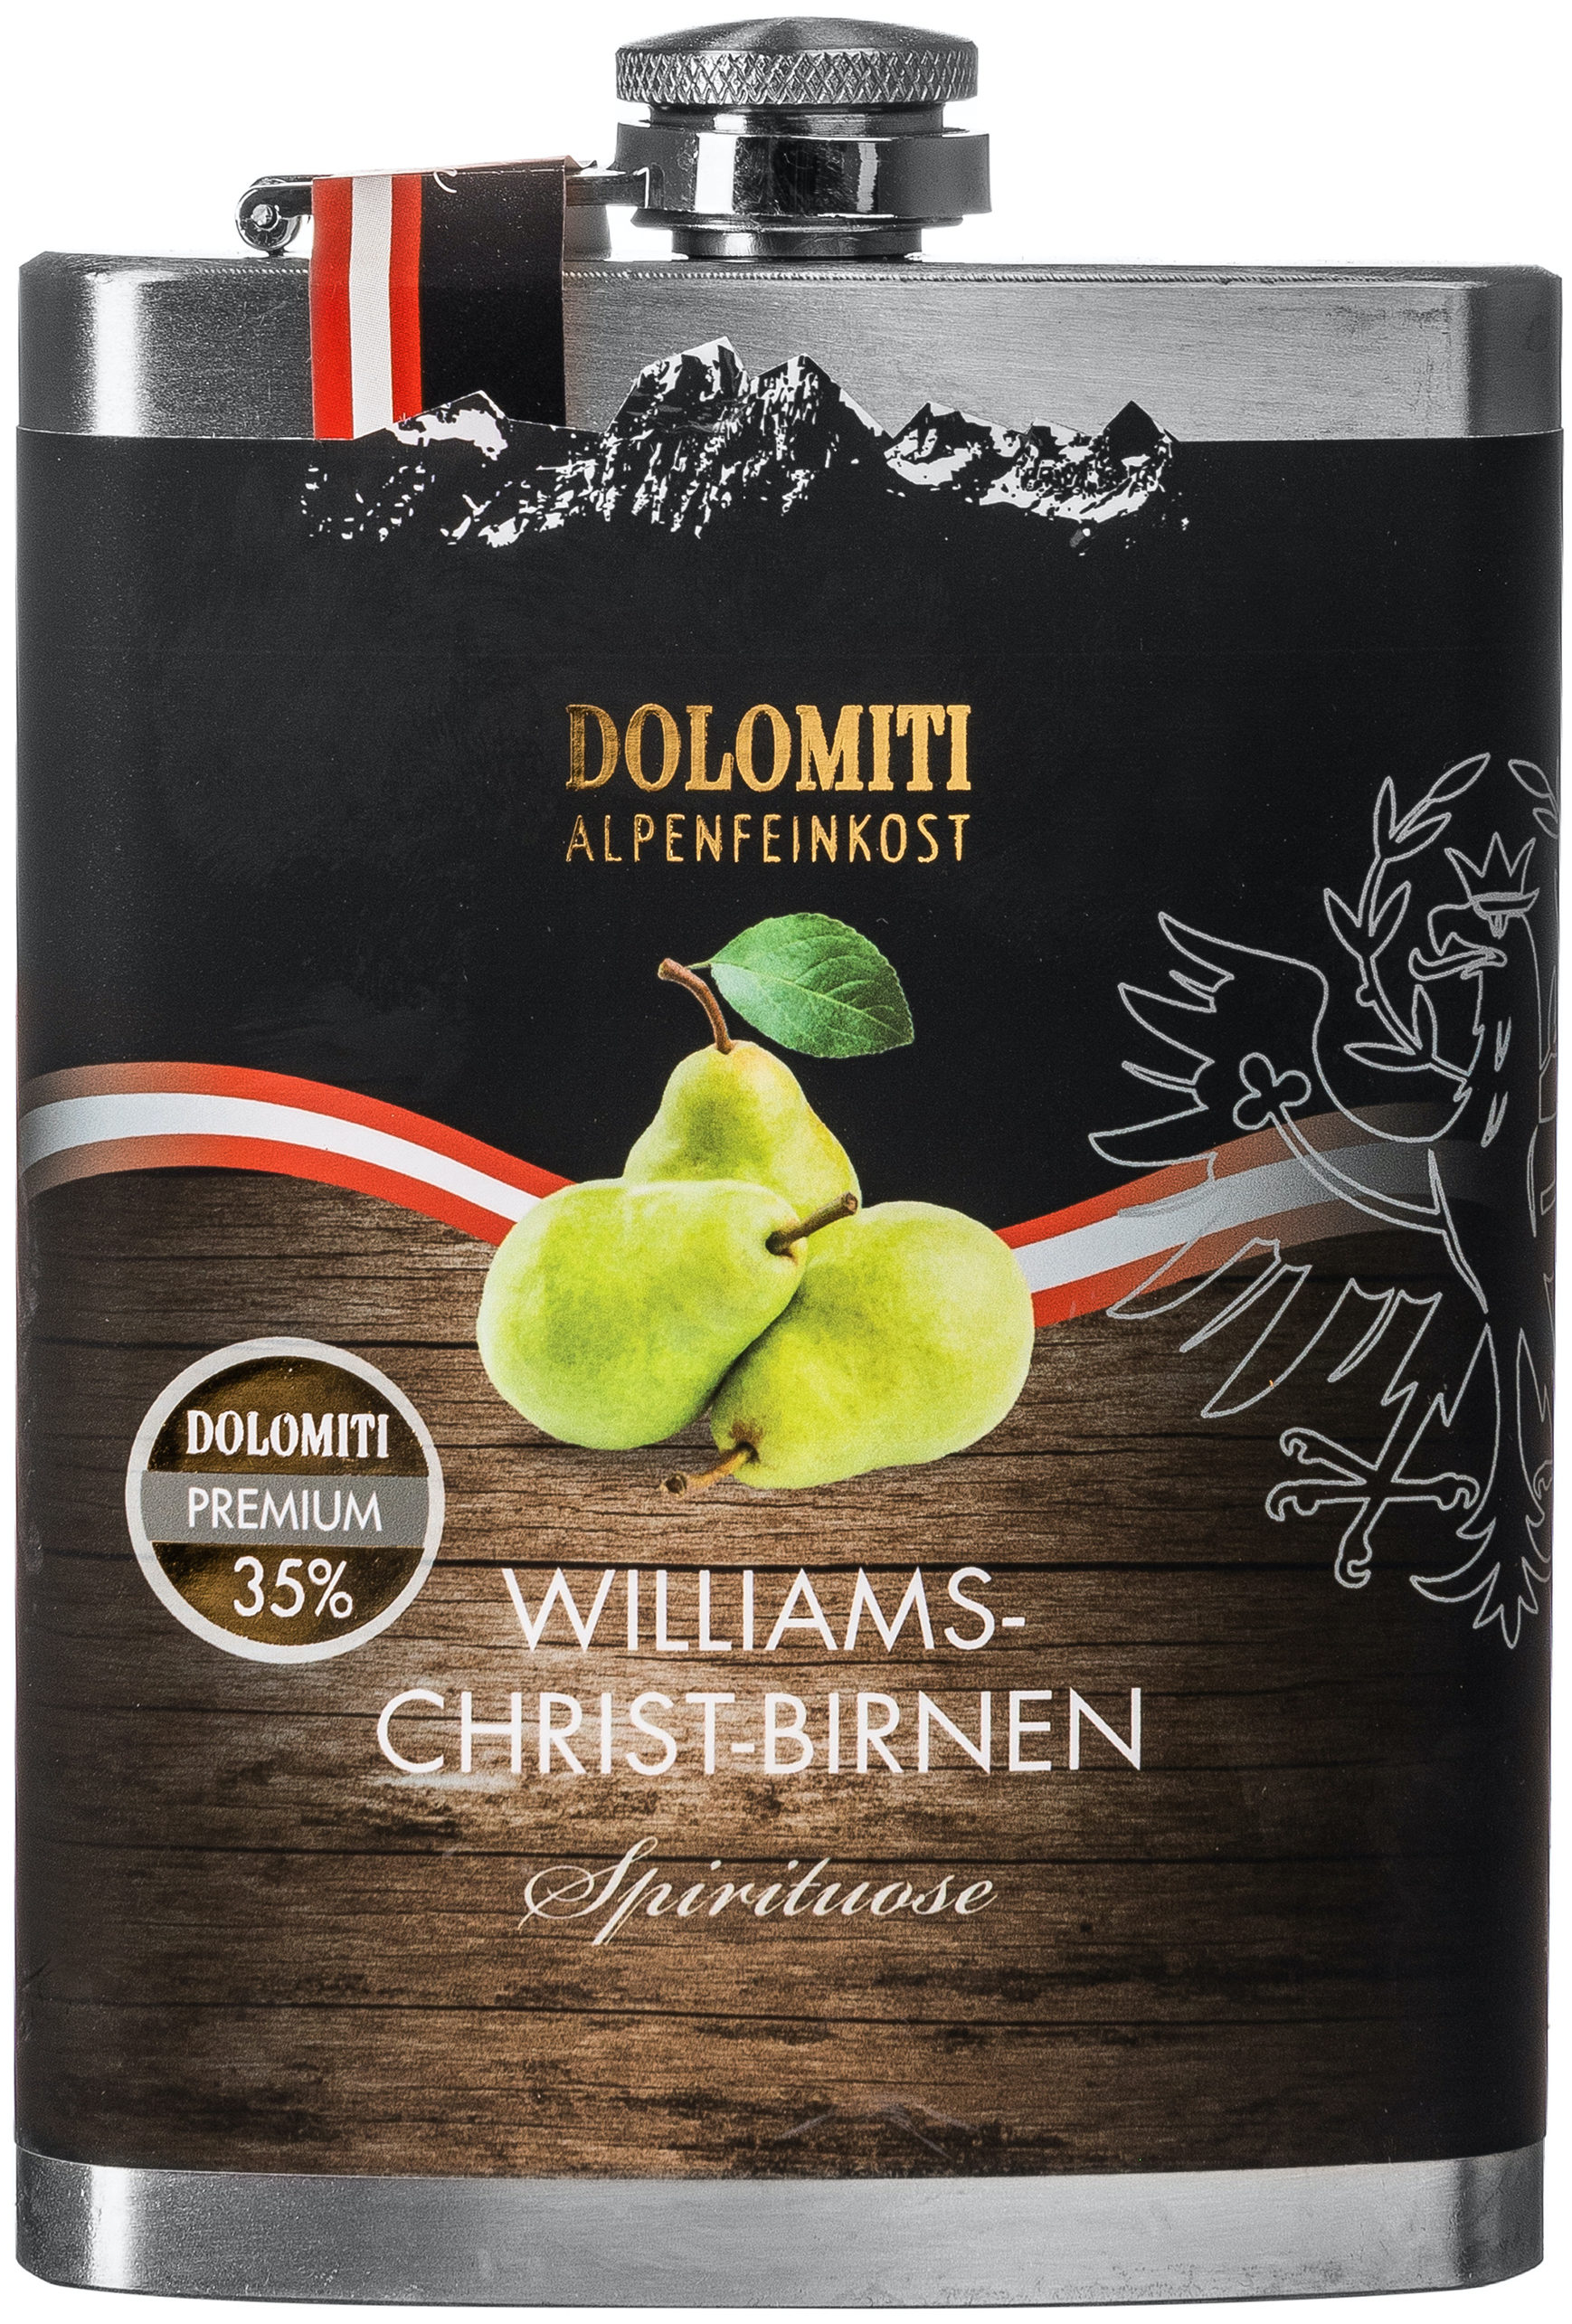 Dolomiti Williams-Christ-Birnen Flachmann 35% vol. 0,2L